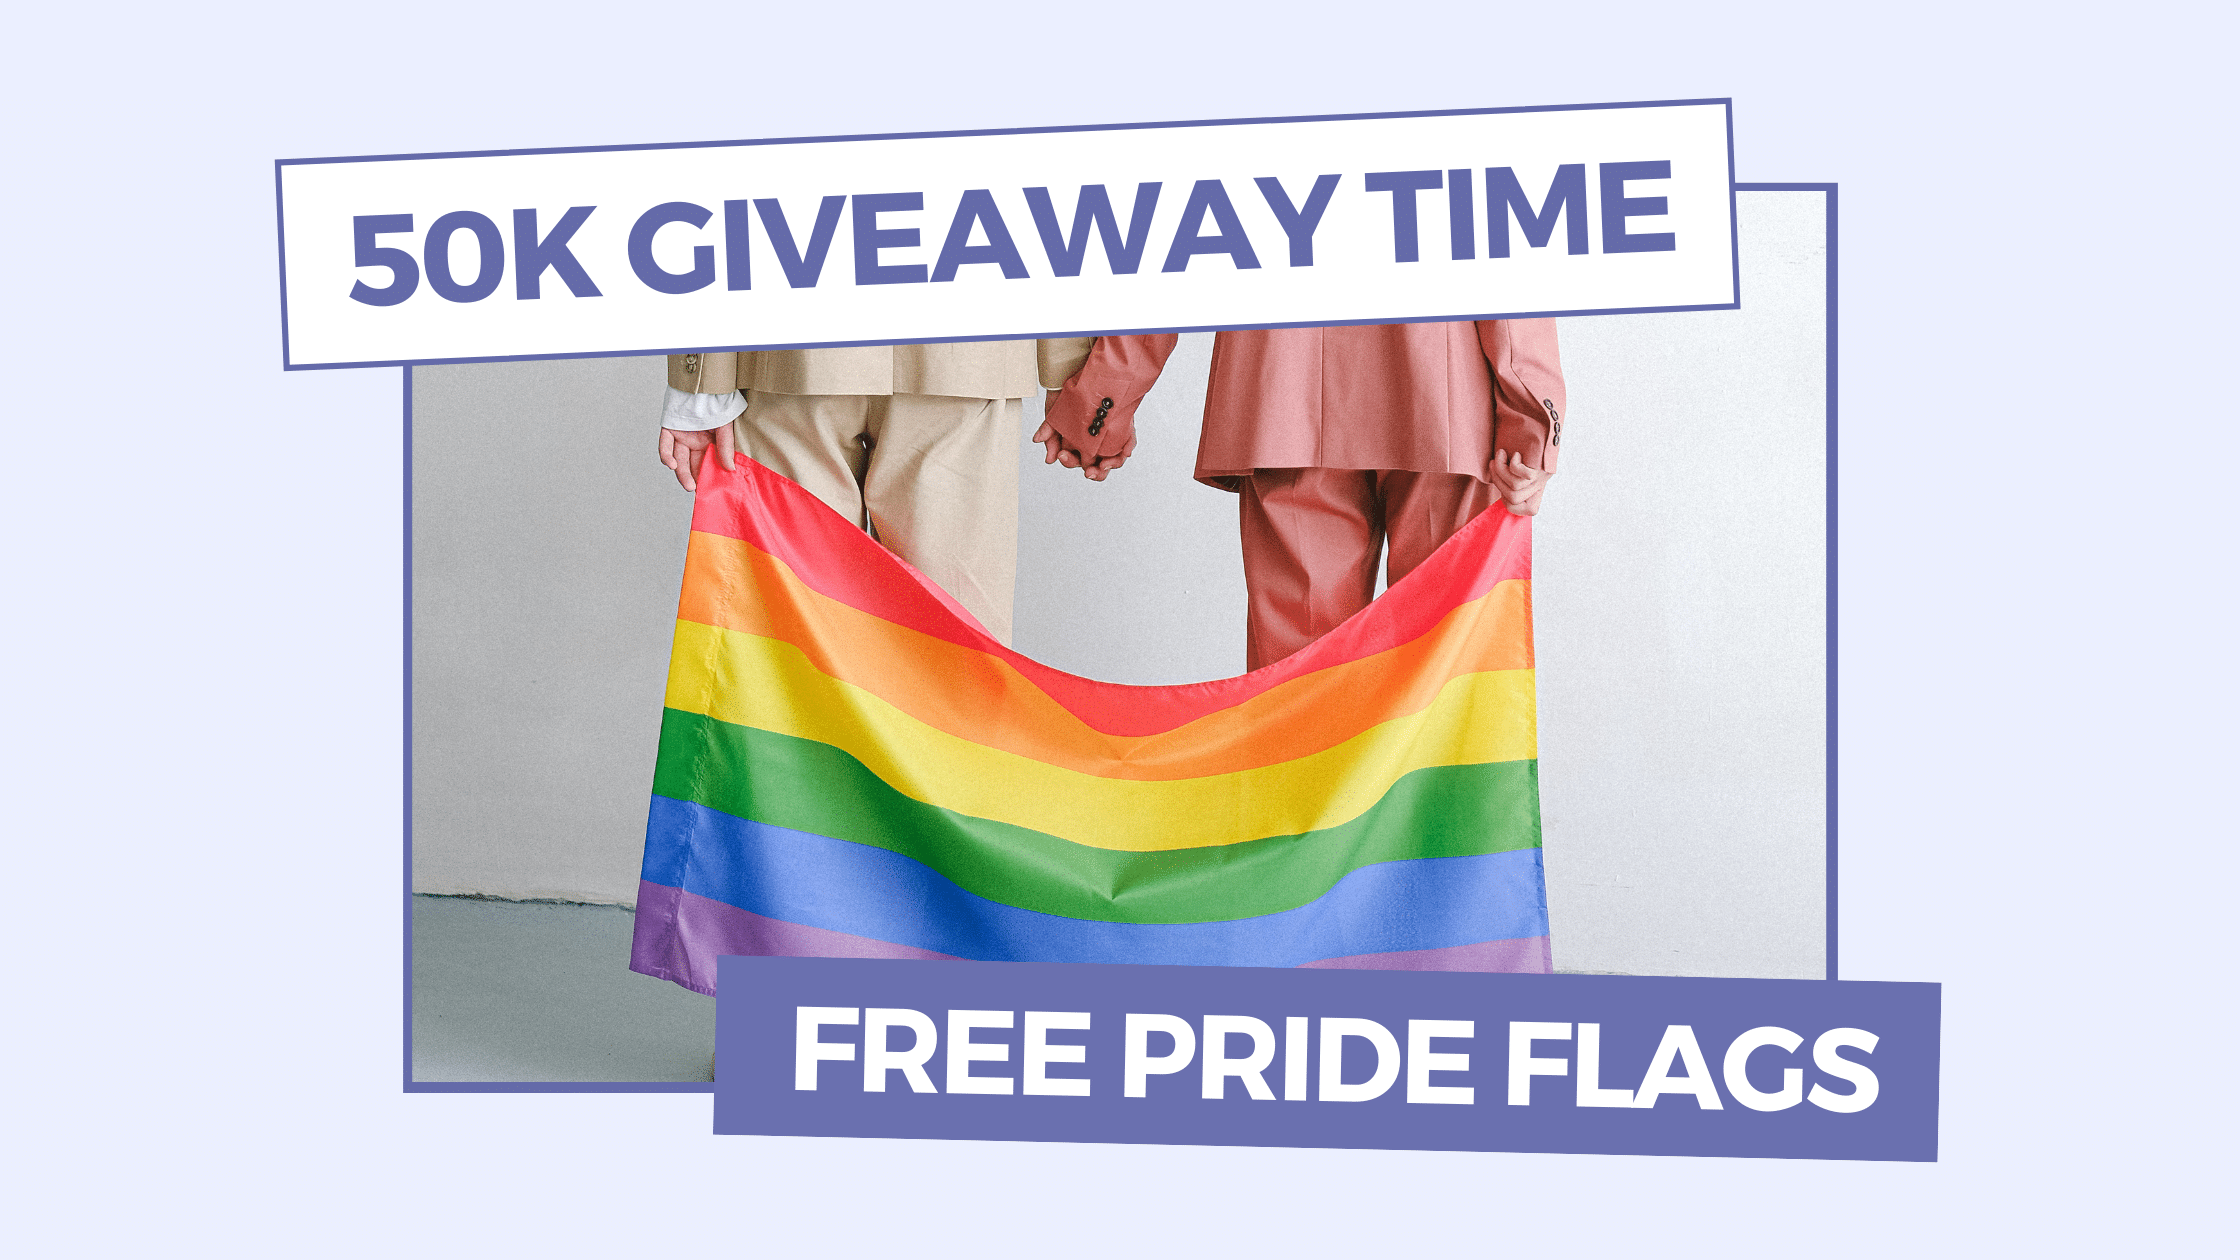 Enter our 50K FREE Flag Giveaway!